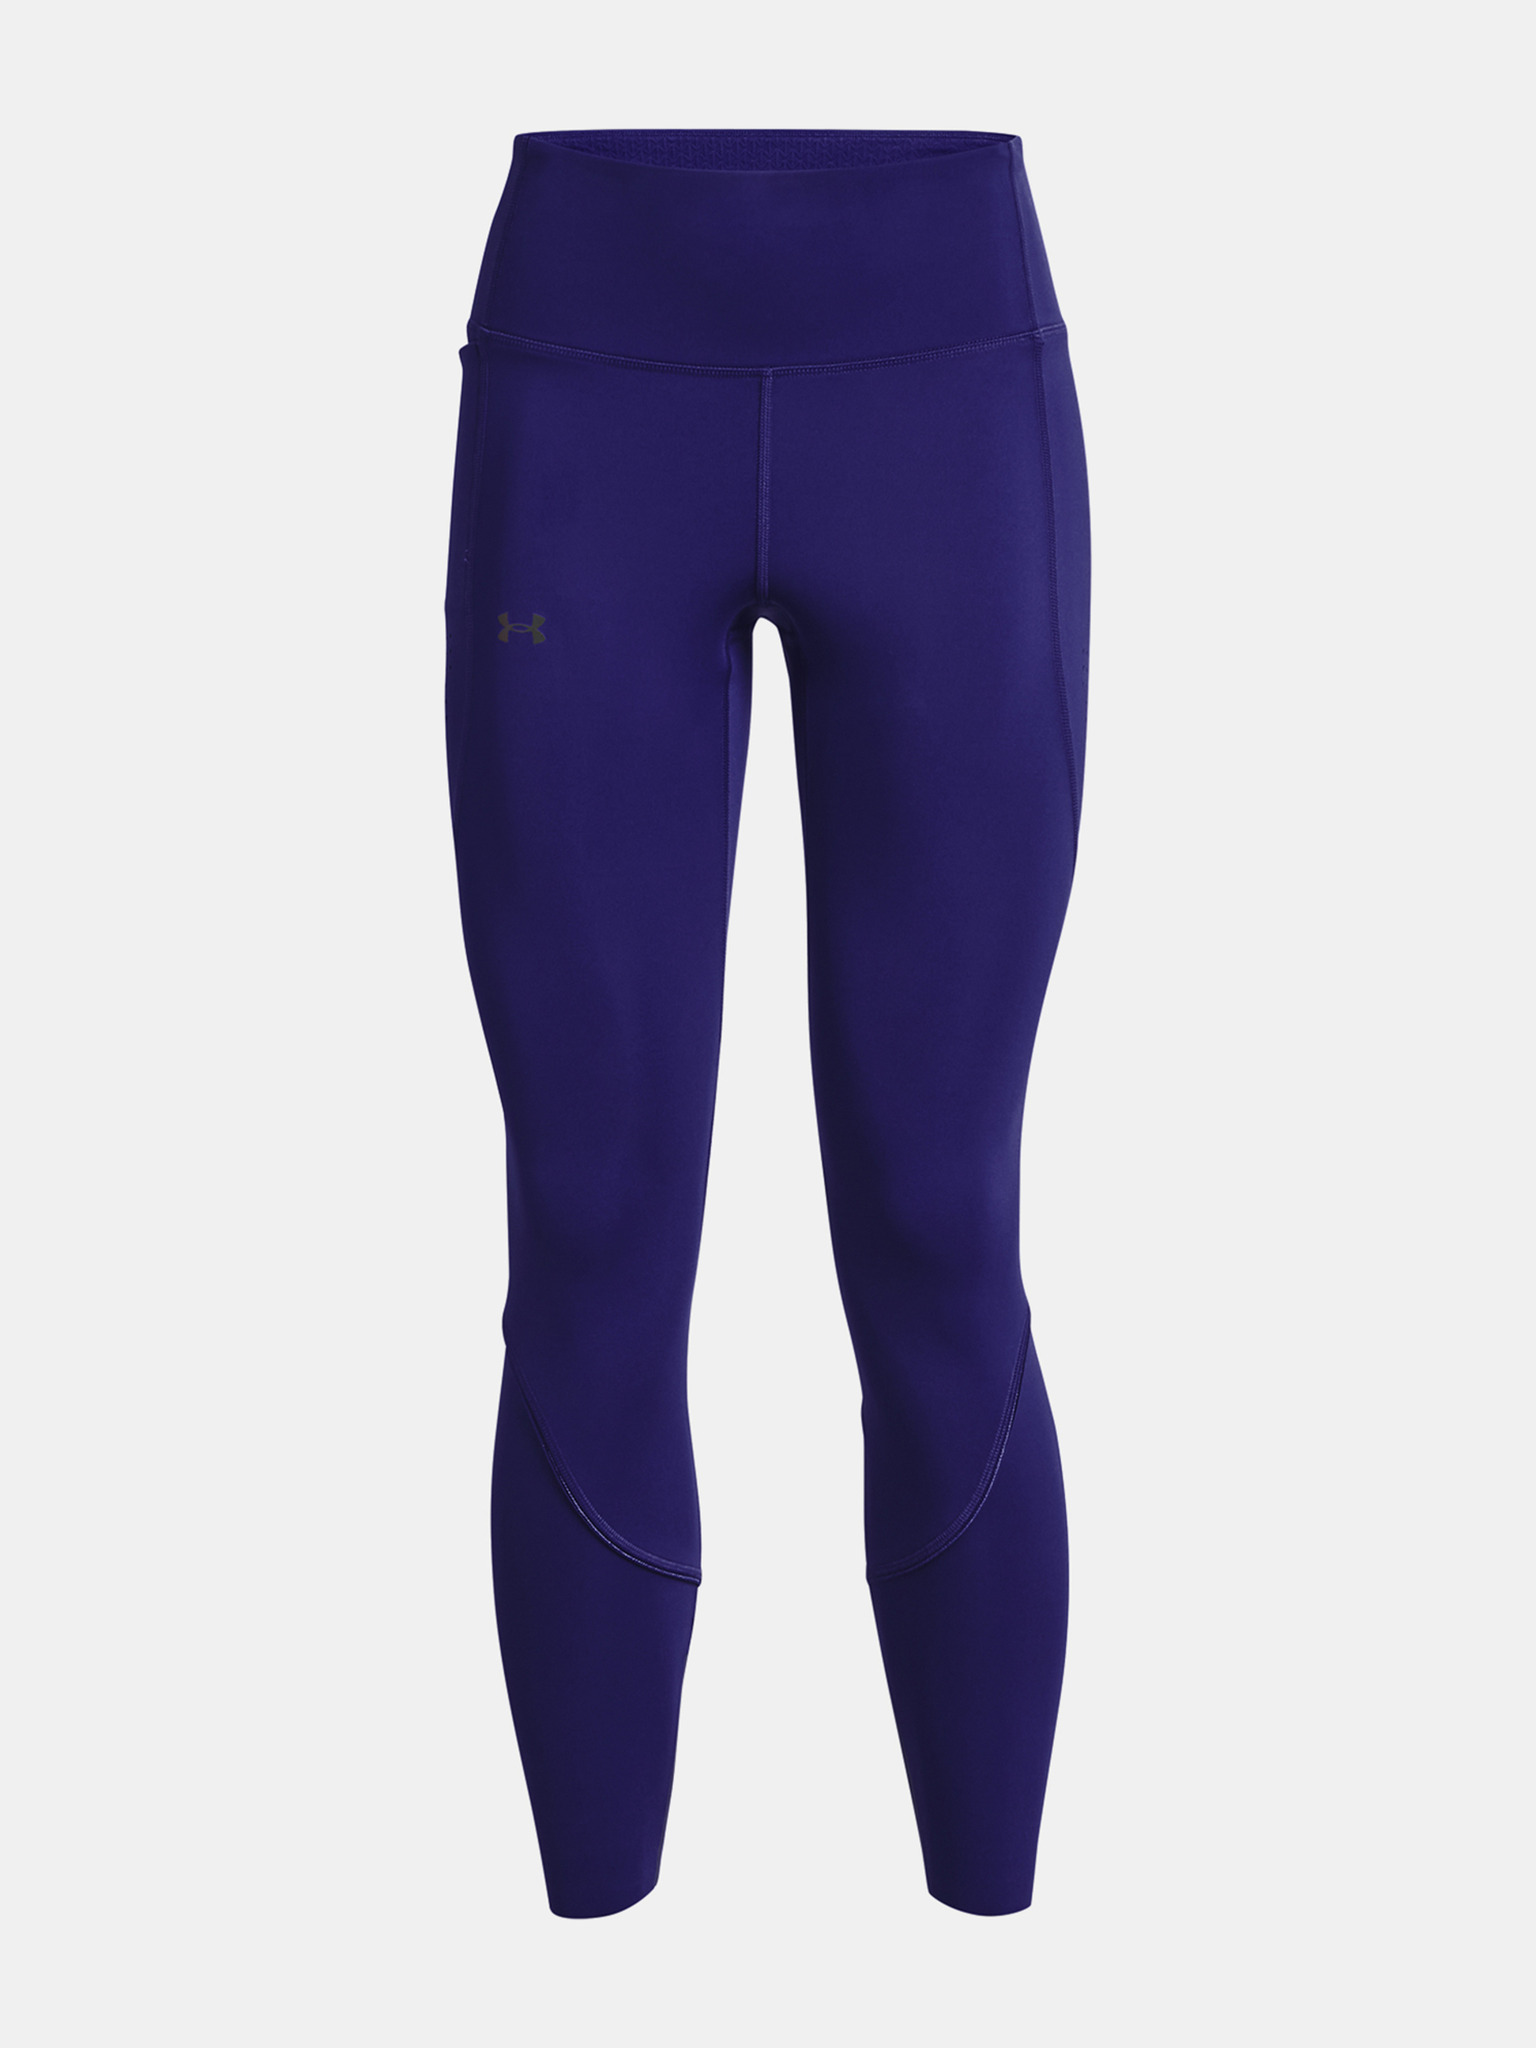 Womens compression 7/8 leggings Under Armour RUSH LEGGING W purple